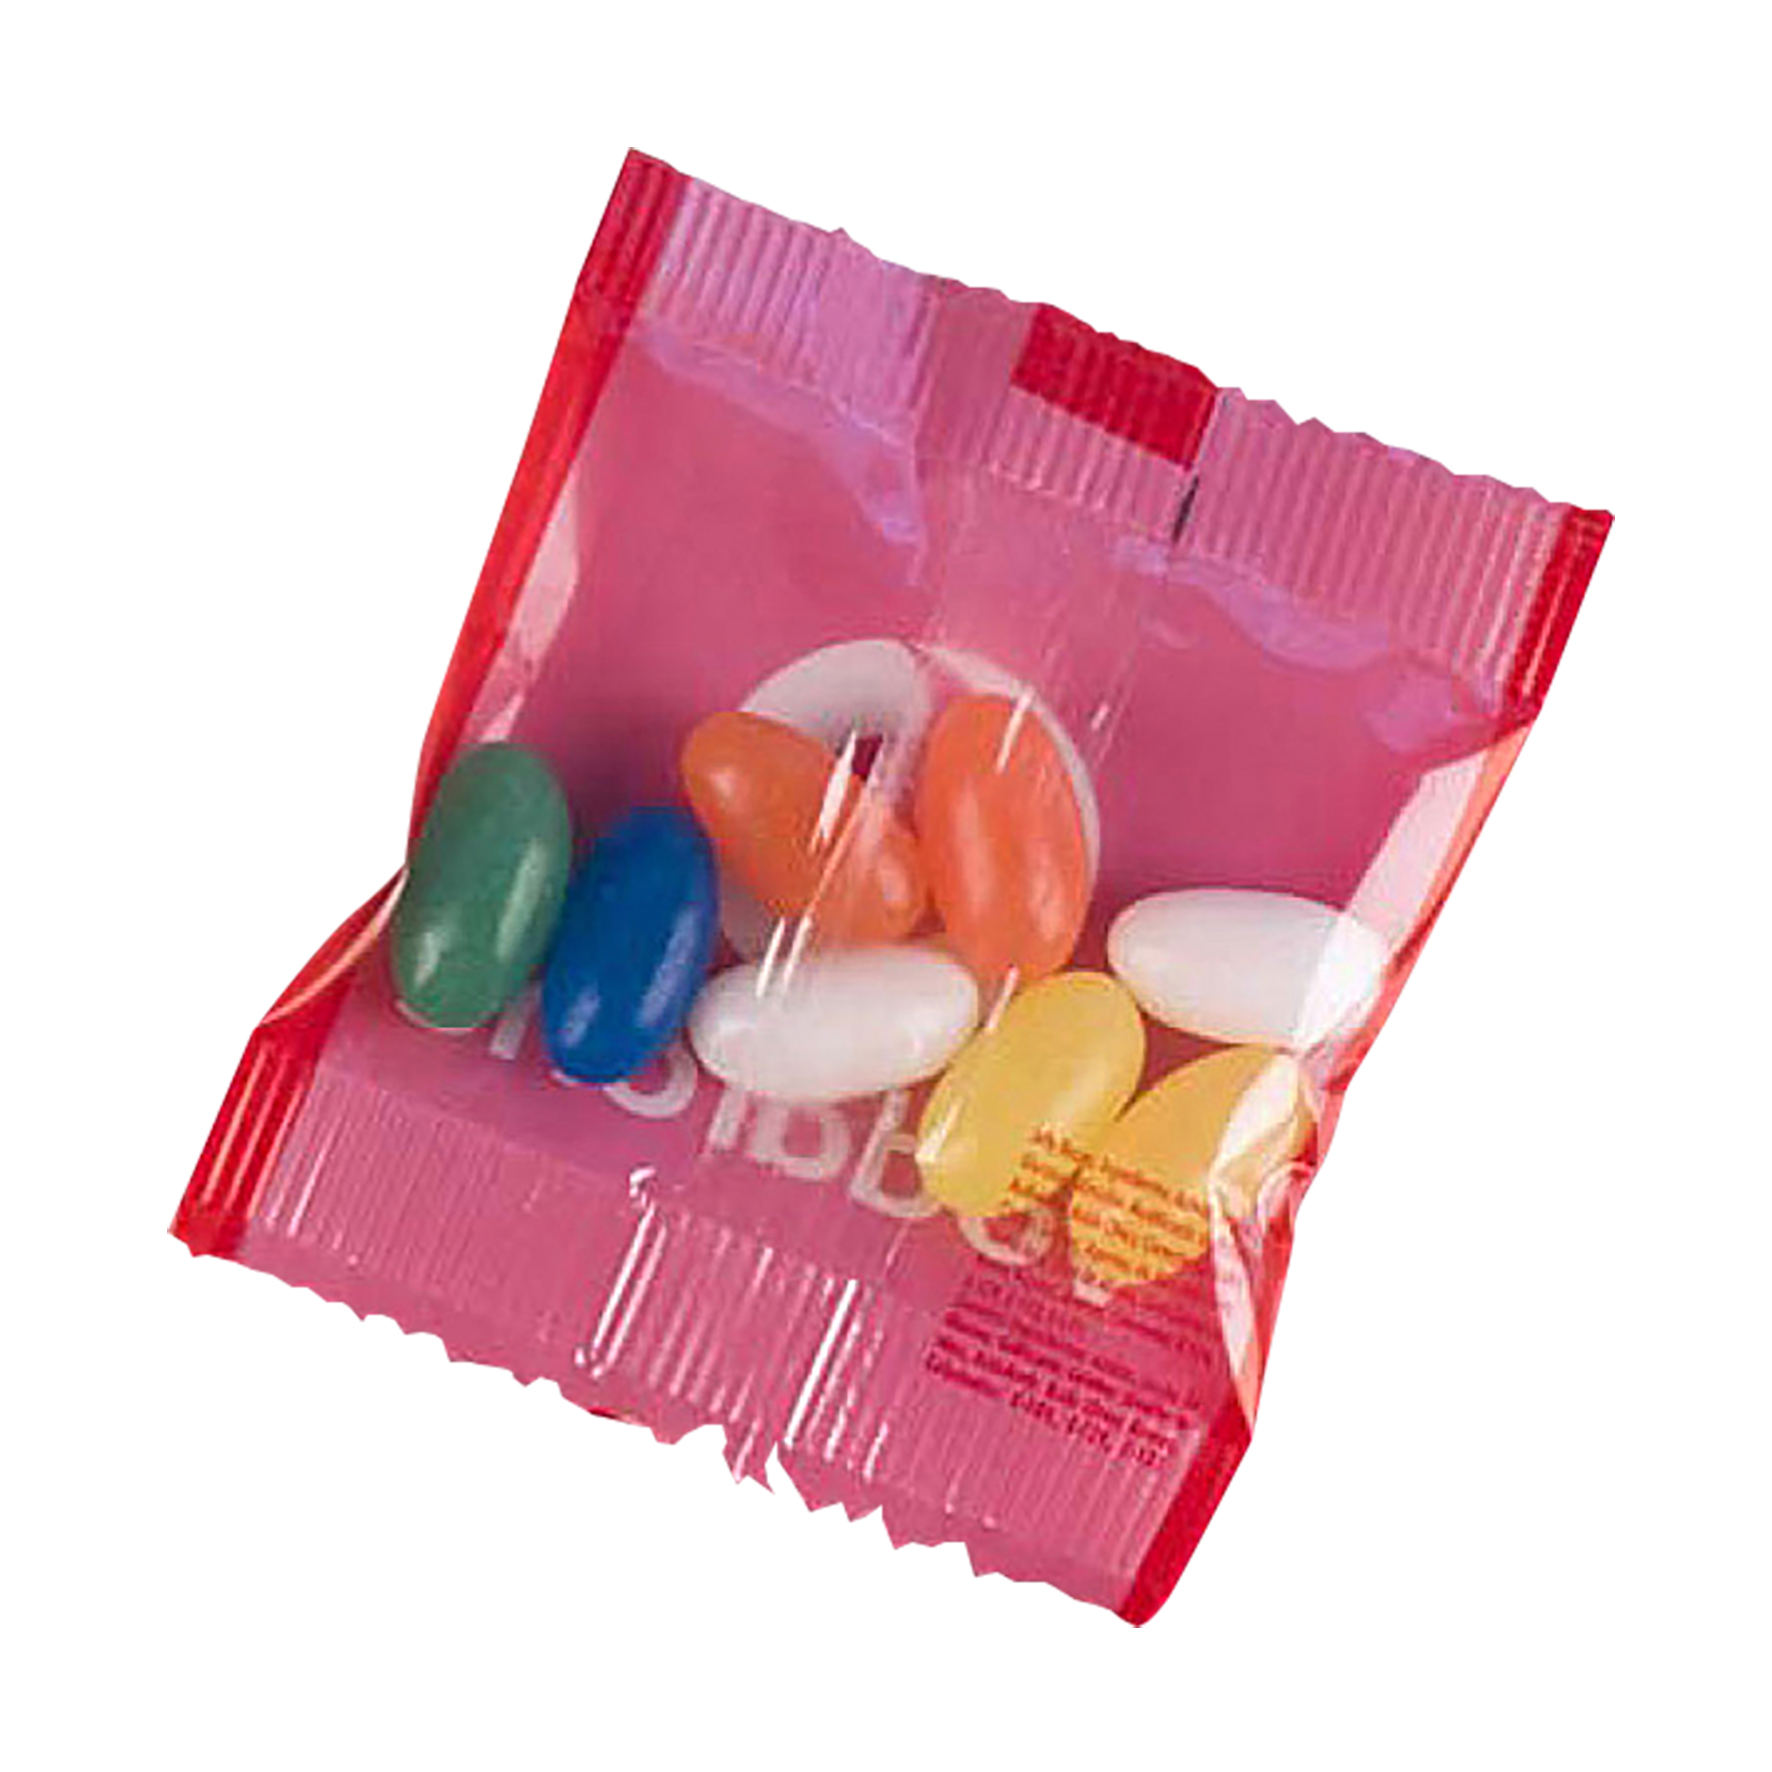 c 0070 00 2 - Fruit pastille bag (7.5g)